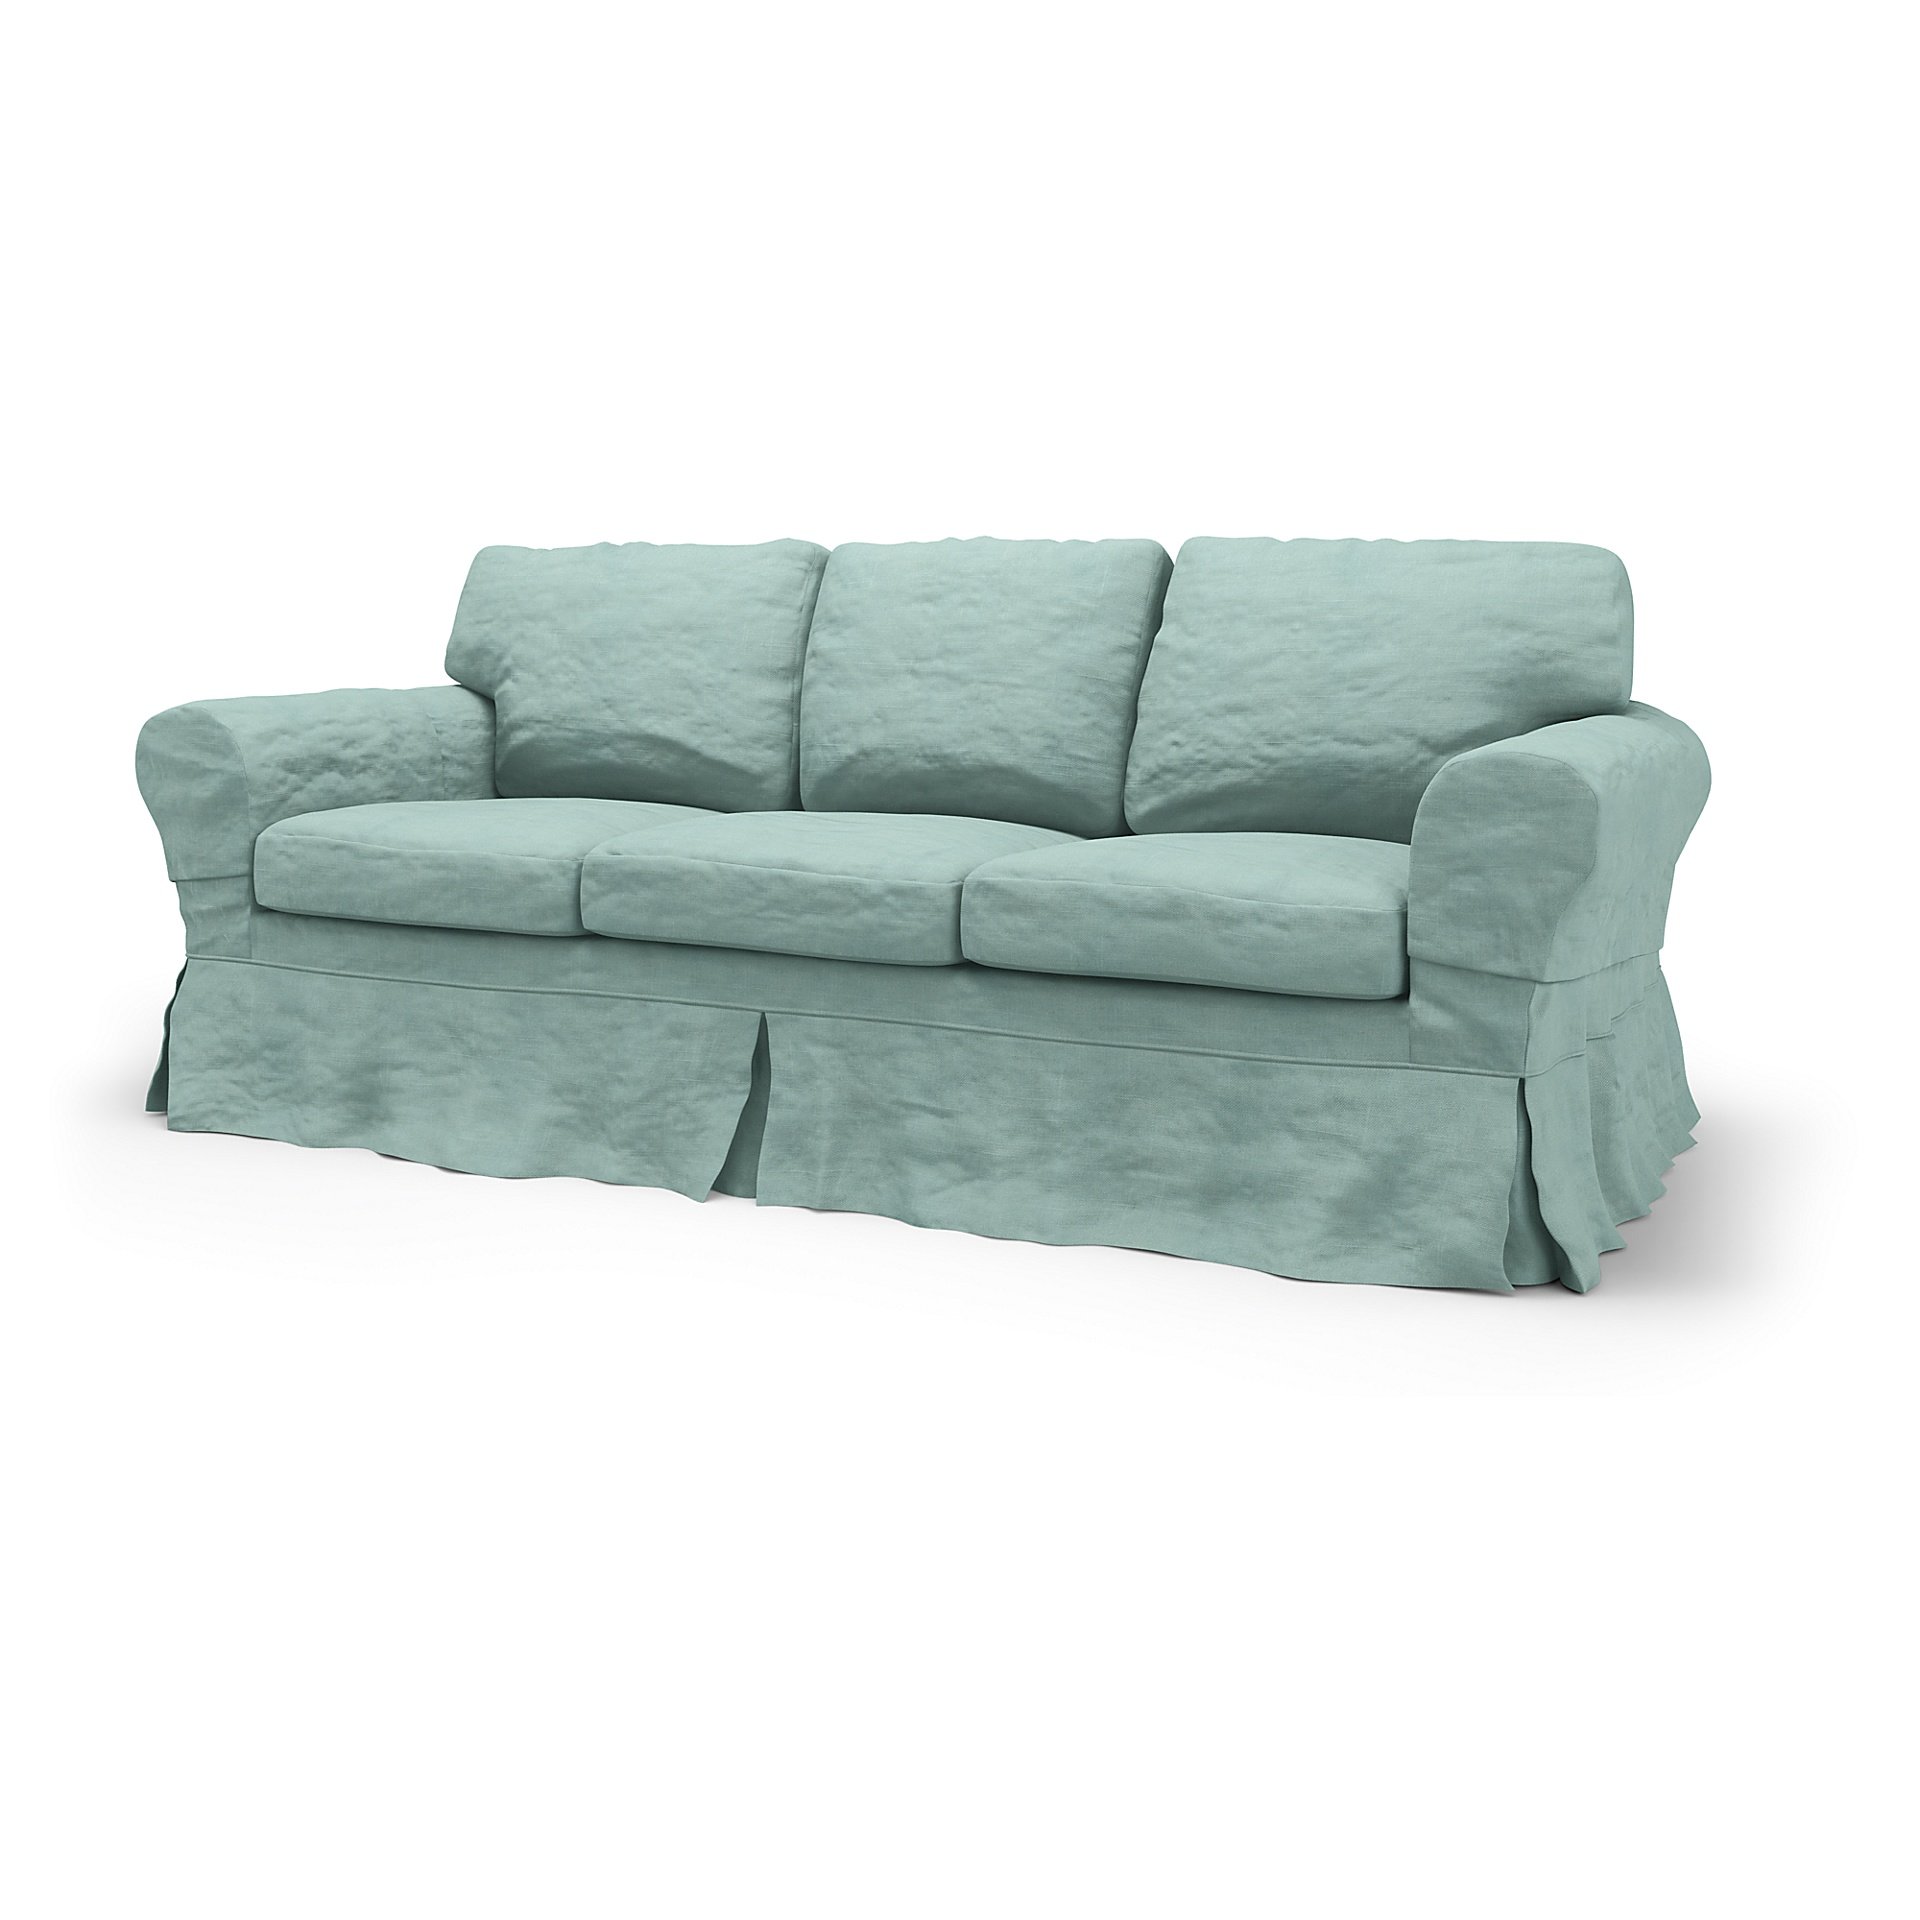 IKEA - Ektorp 3 Seater Sofa Bed Cover, Mineral Blue, Linen - Bemz